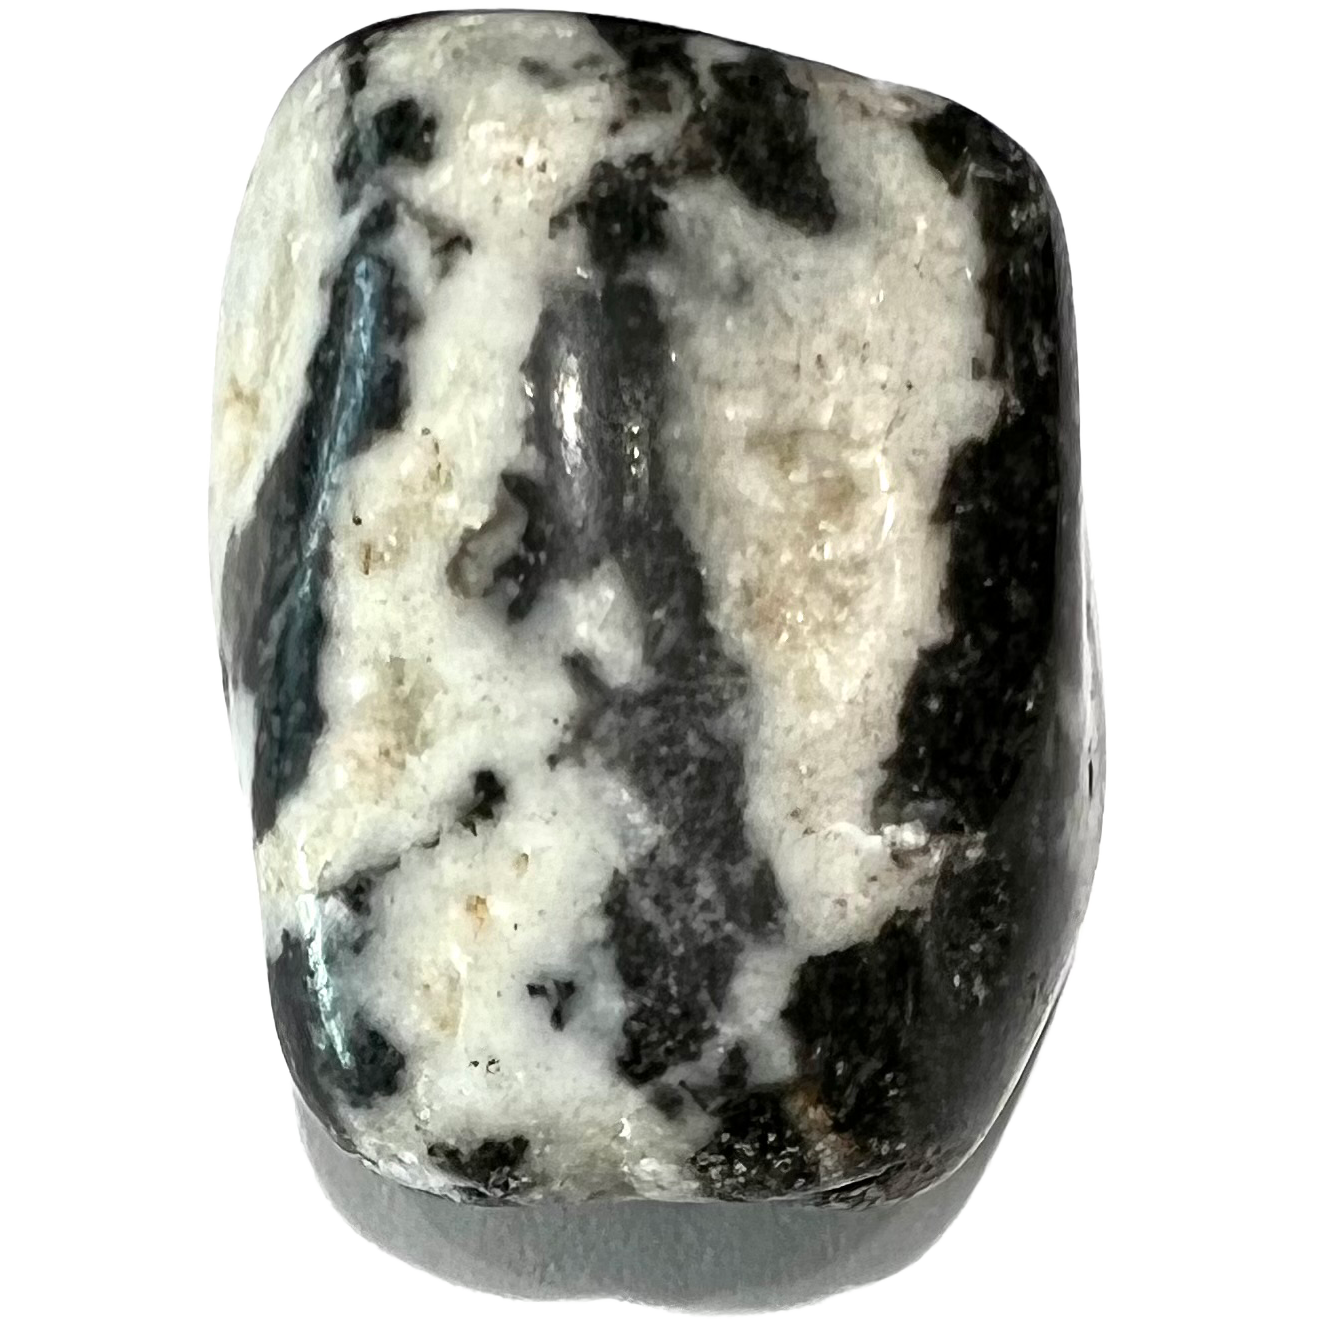 A tumble polished zebra agate stone.  The stone is black and white striped.